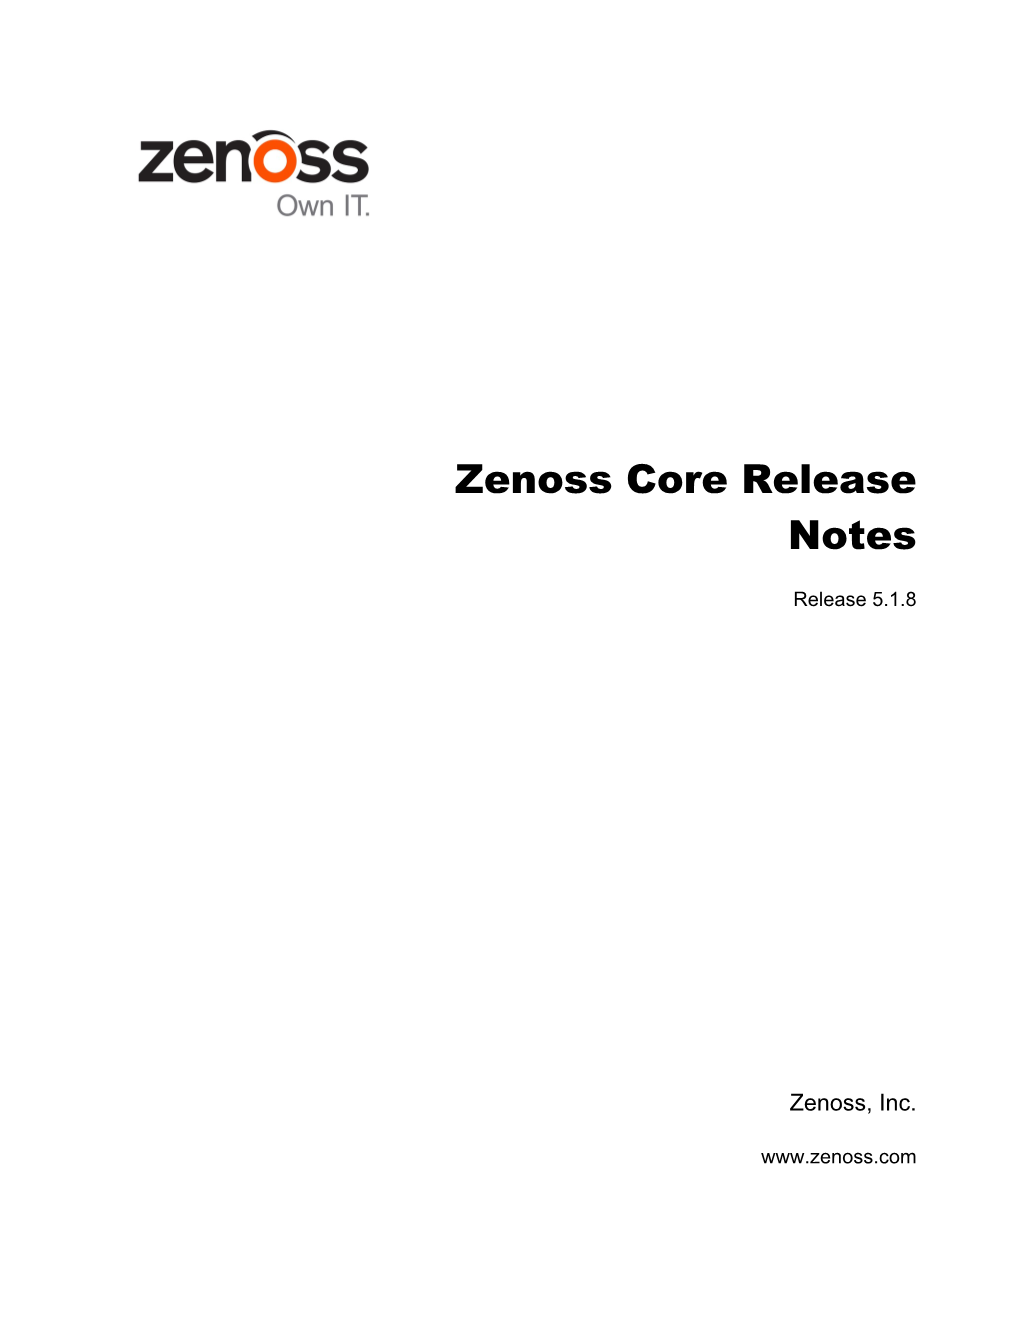 Zenoss Core Release Notes